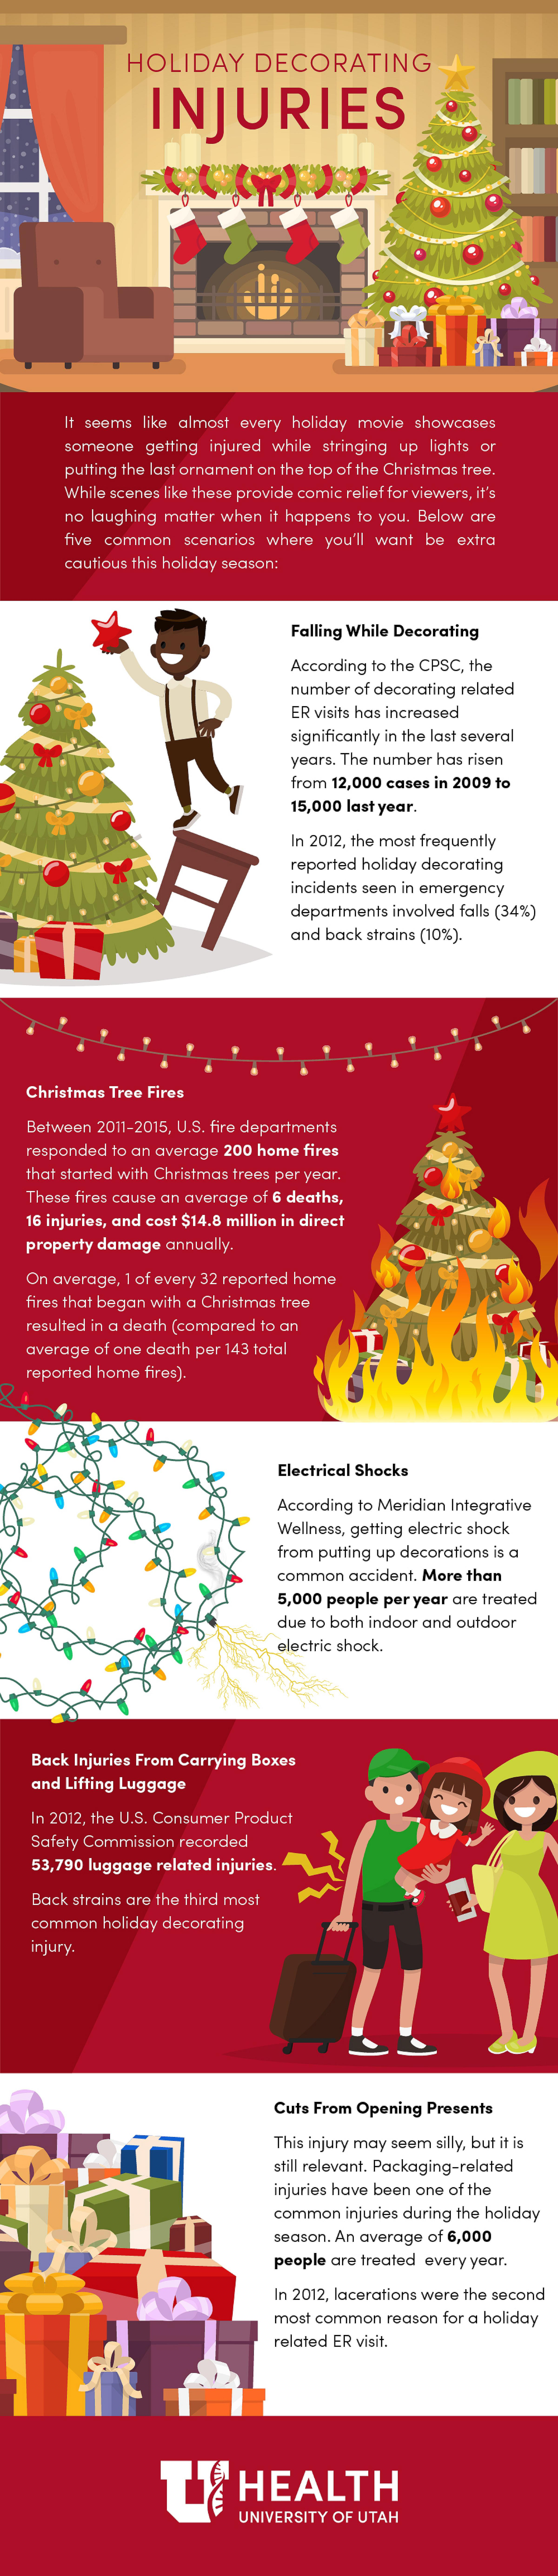 Holiday decorating injury infographic